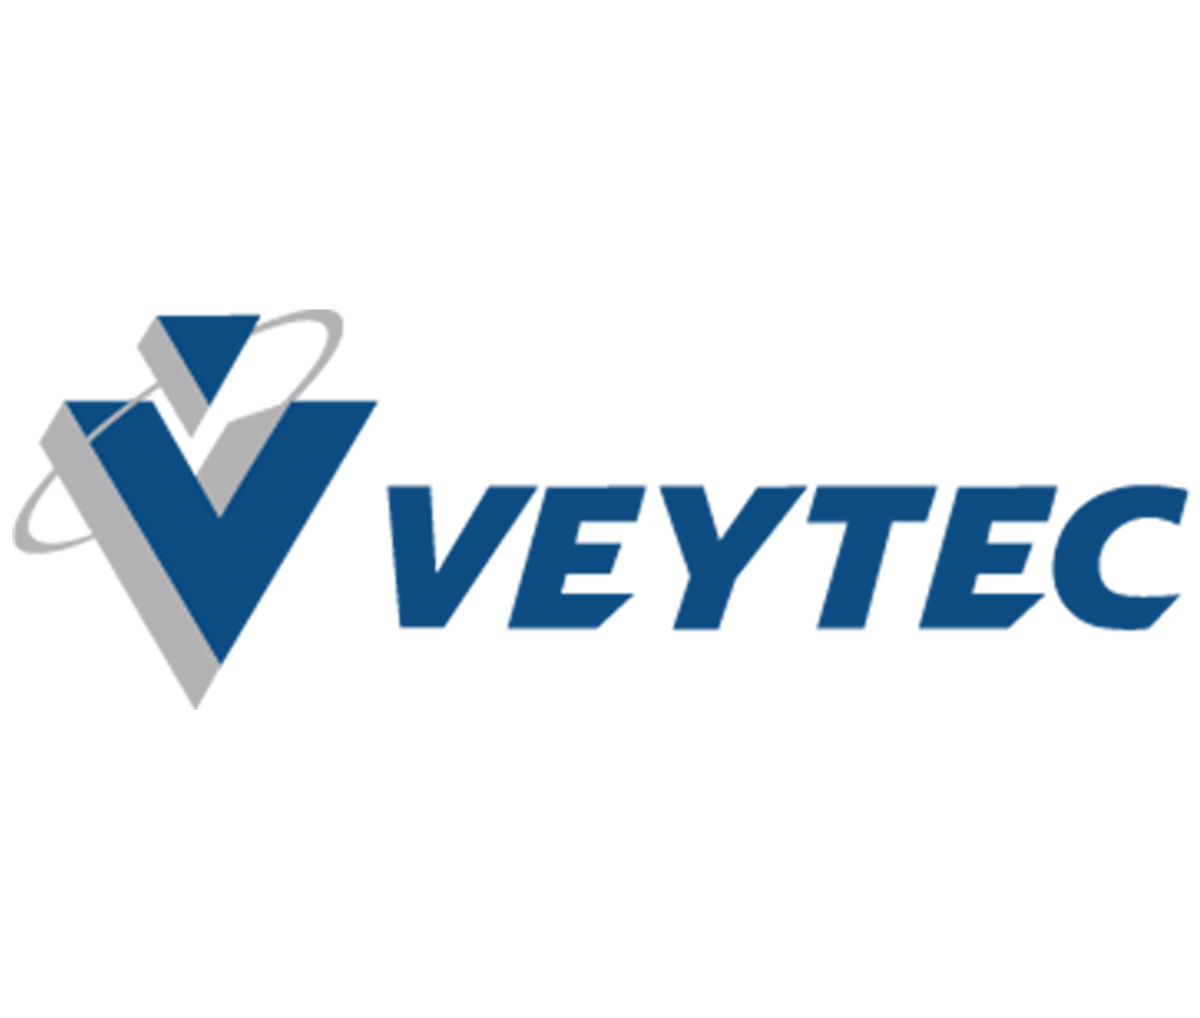 Veytec Logo